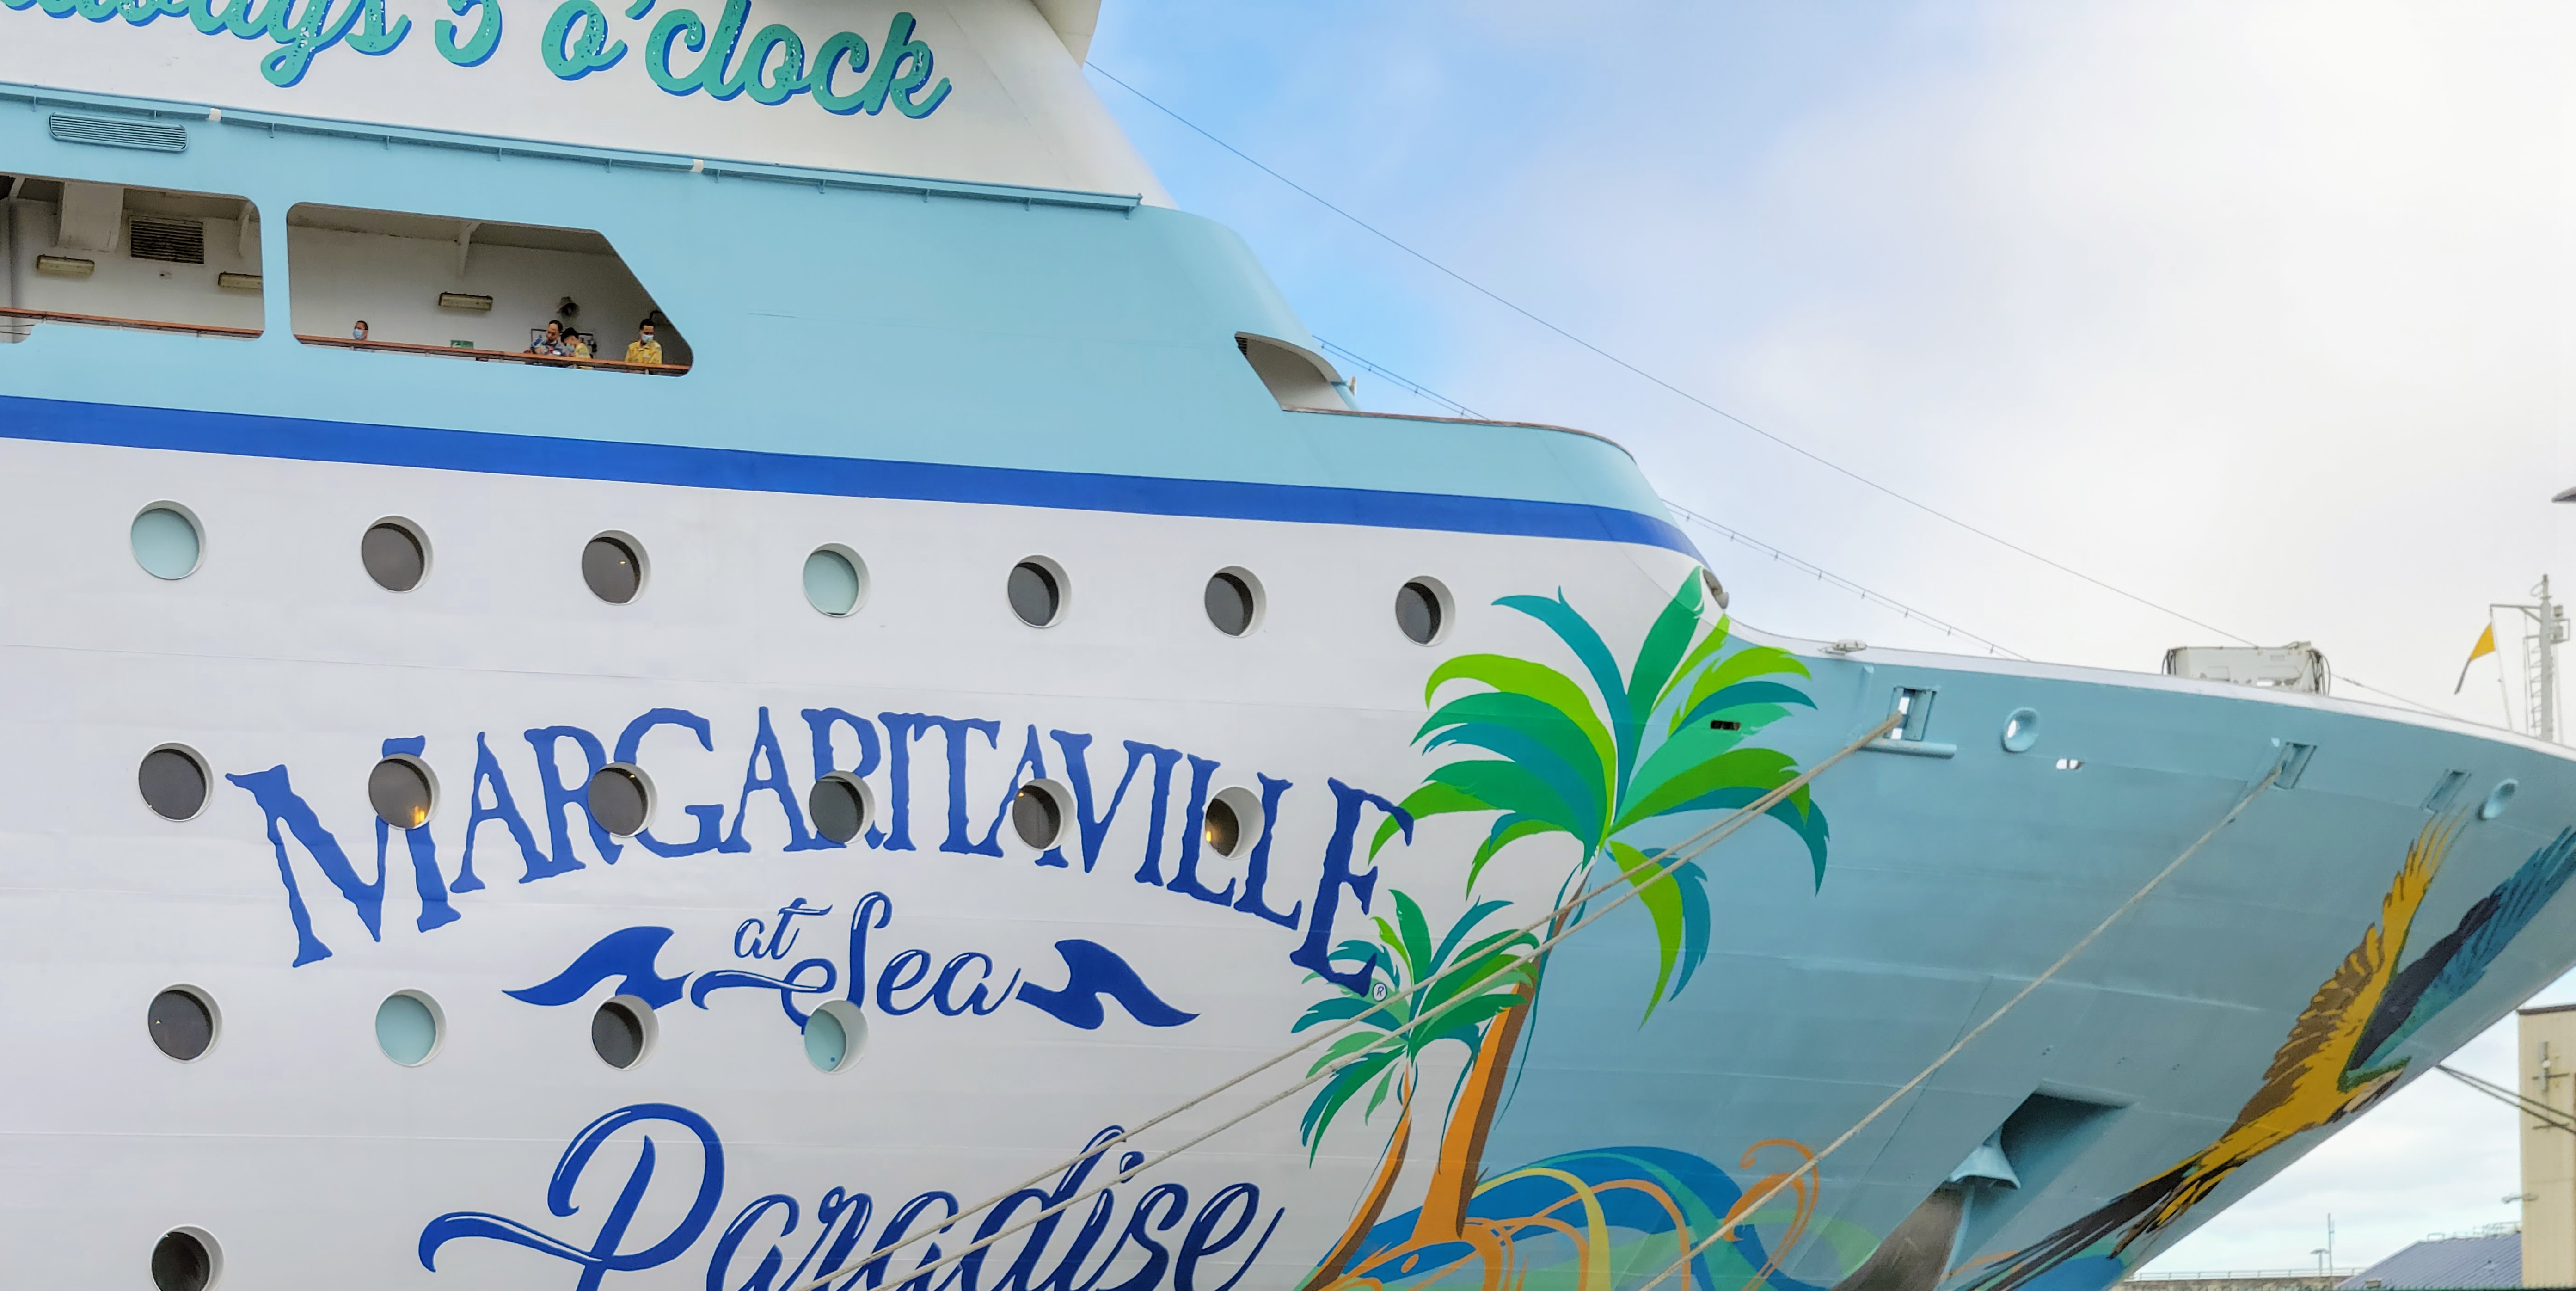 Margaritaville at Sea inaugural